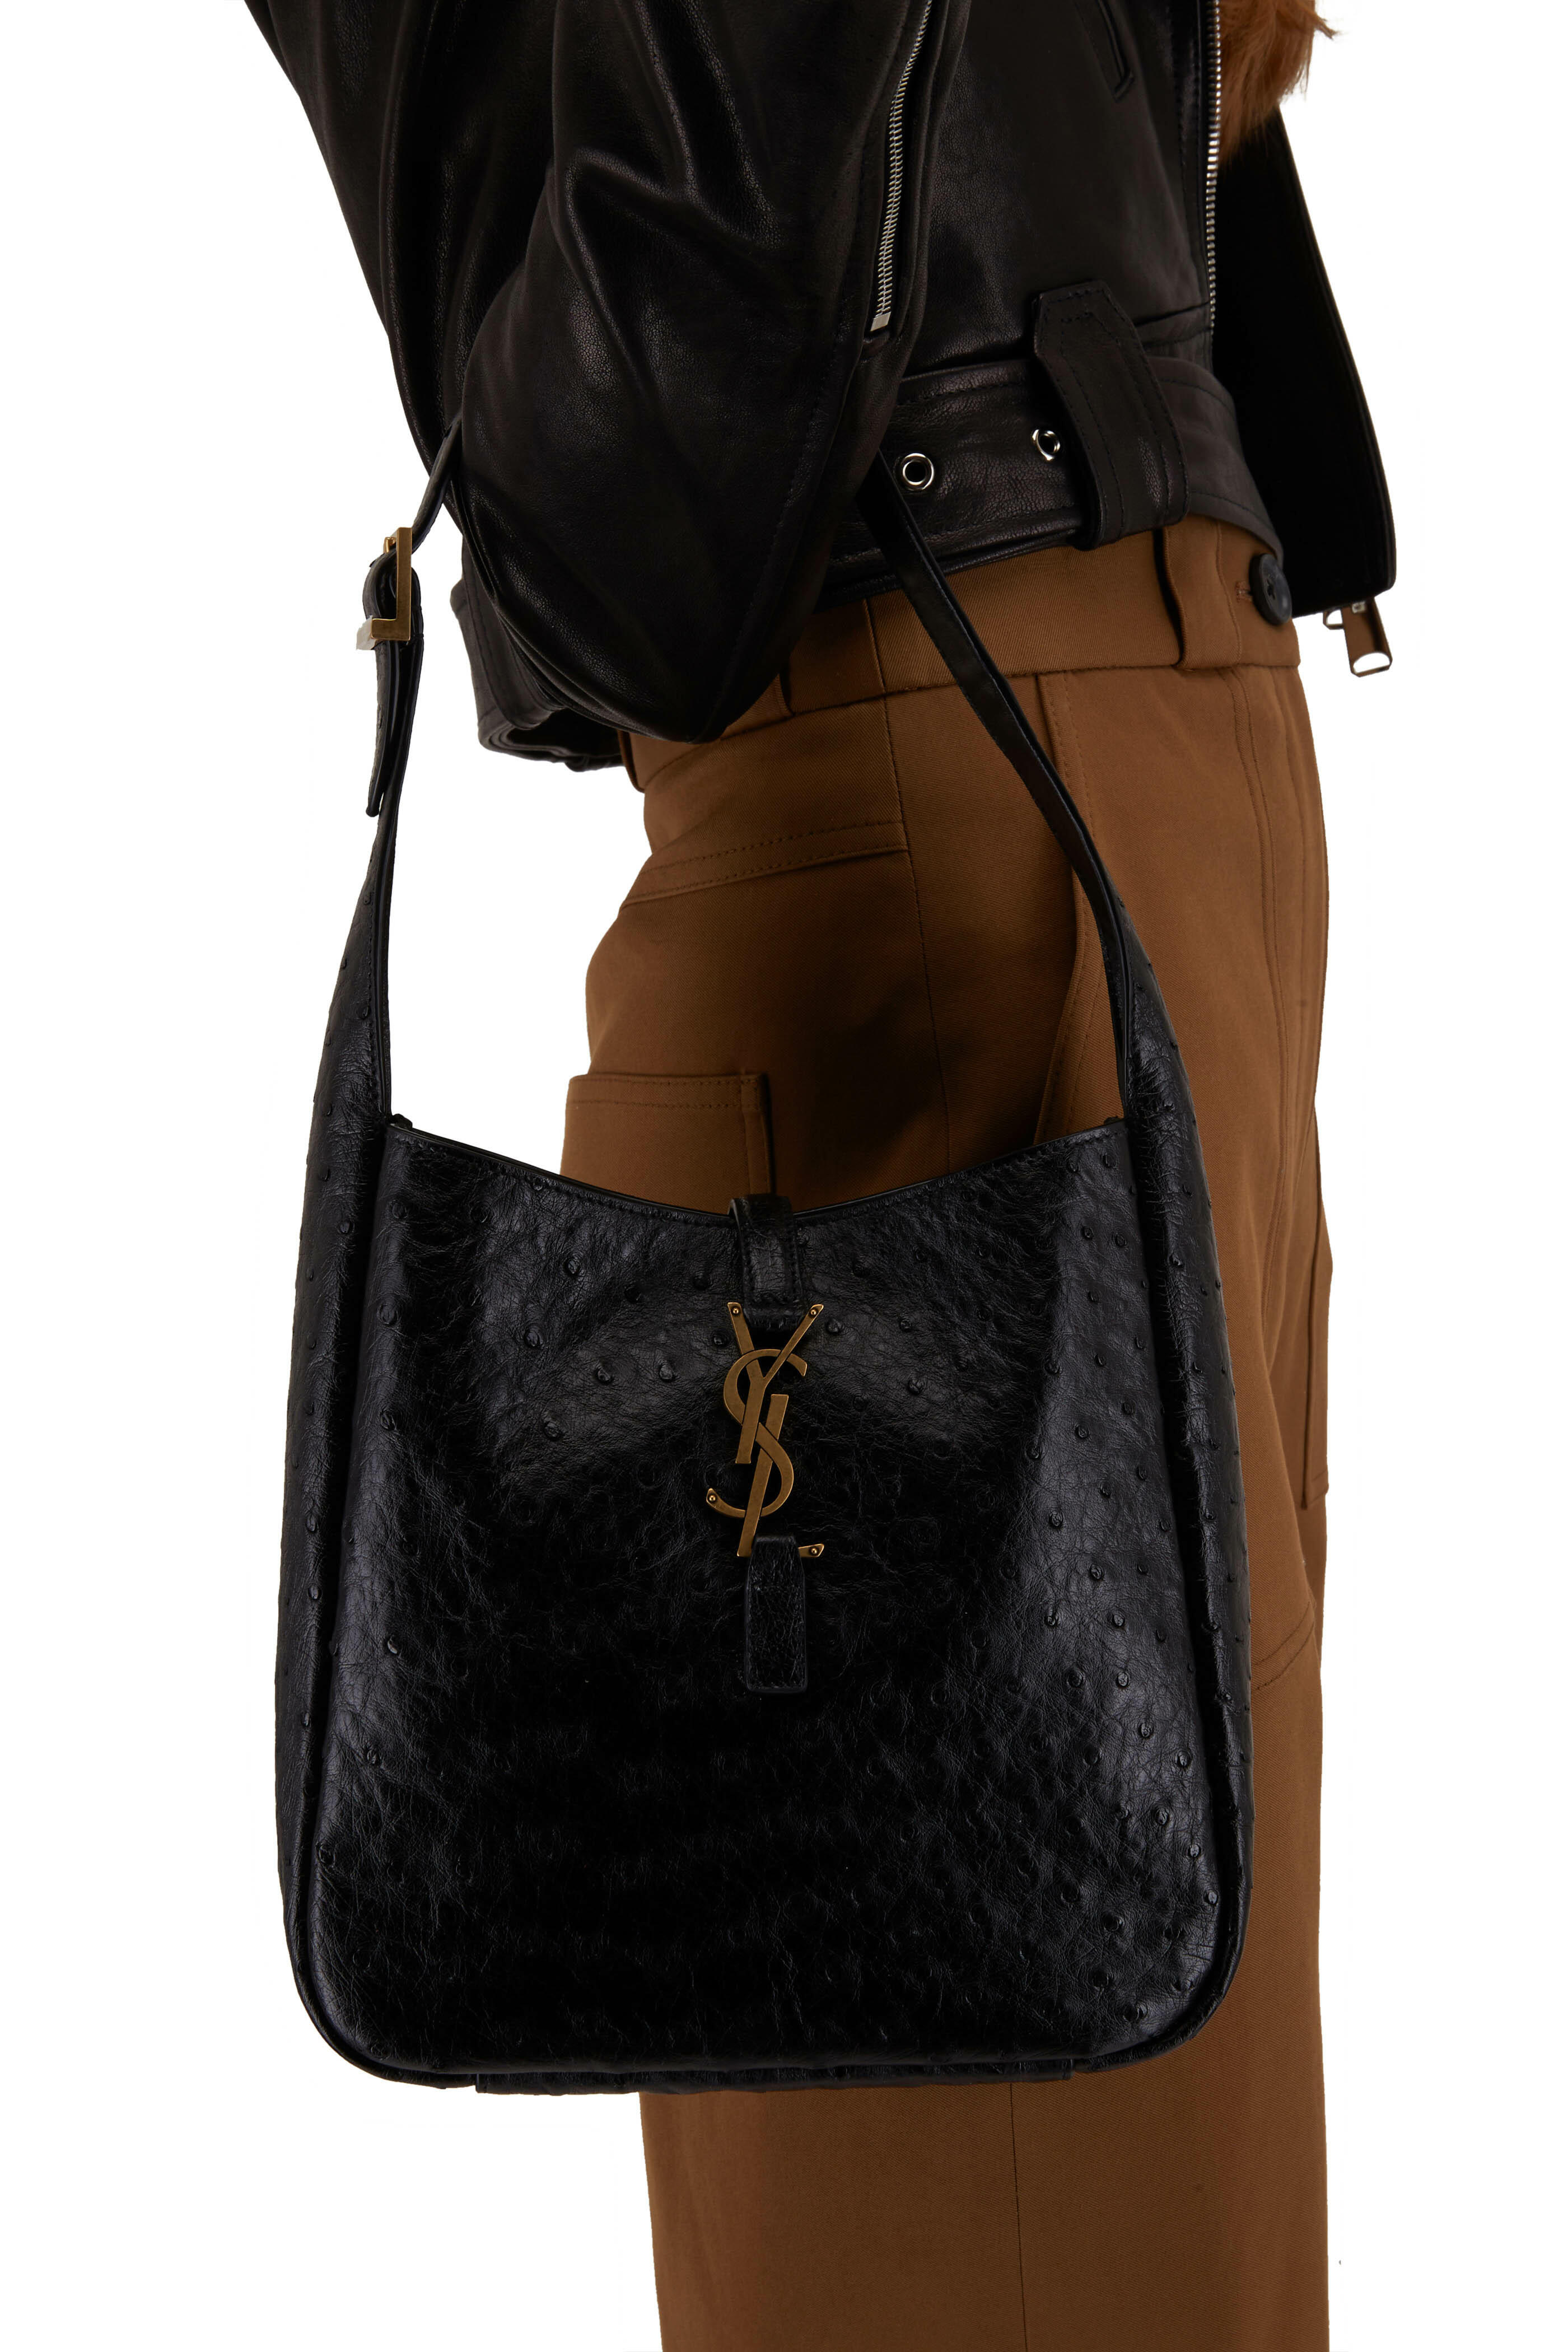 YSL black hardware : r/handbags